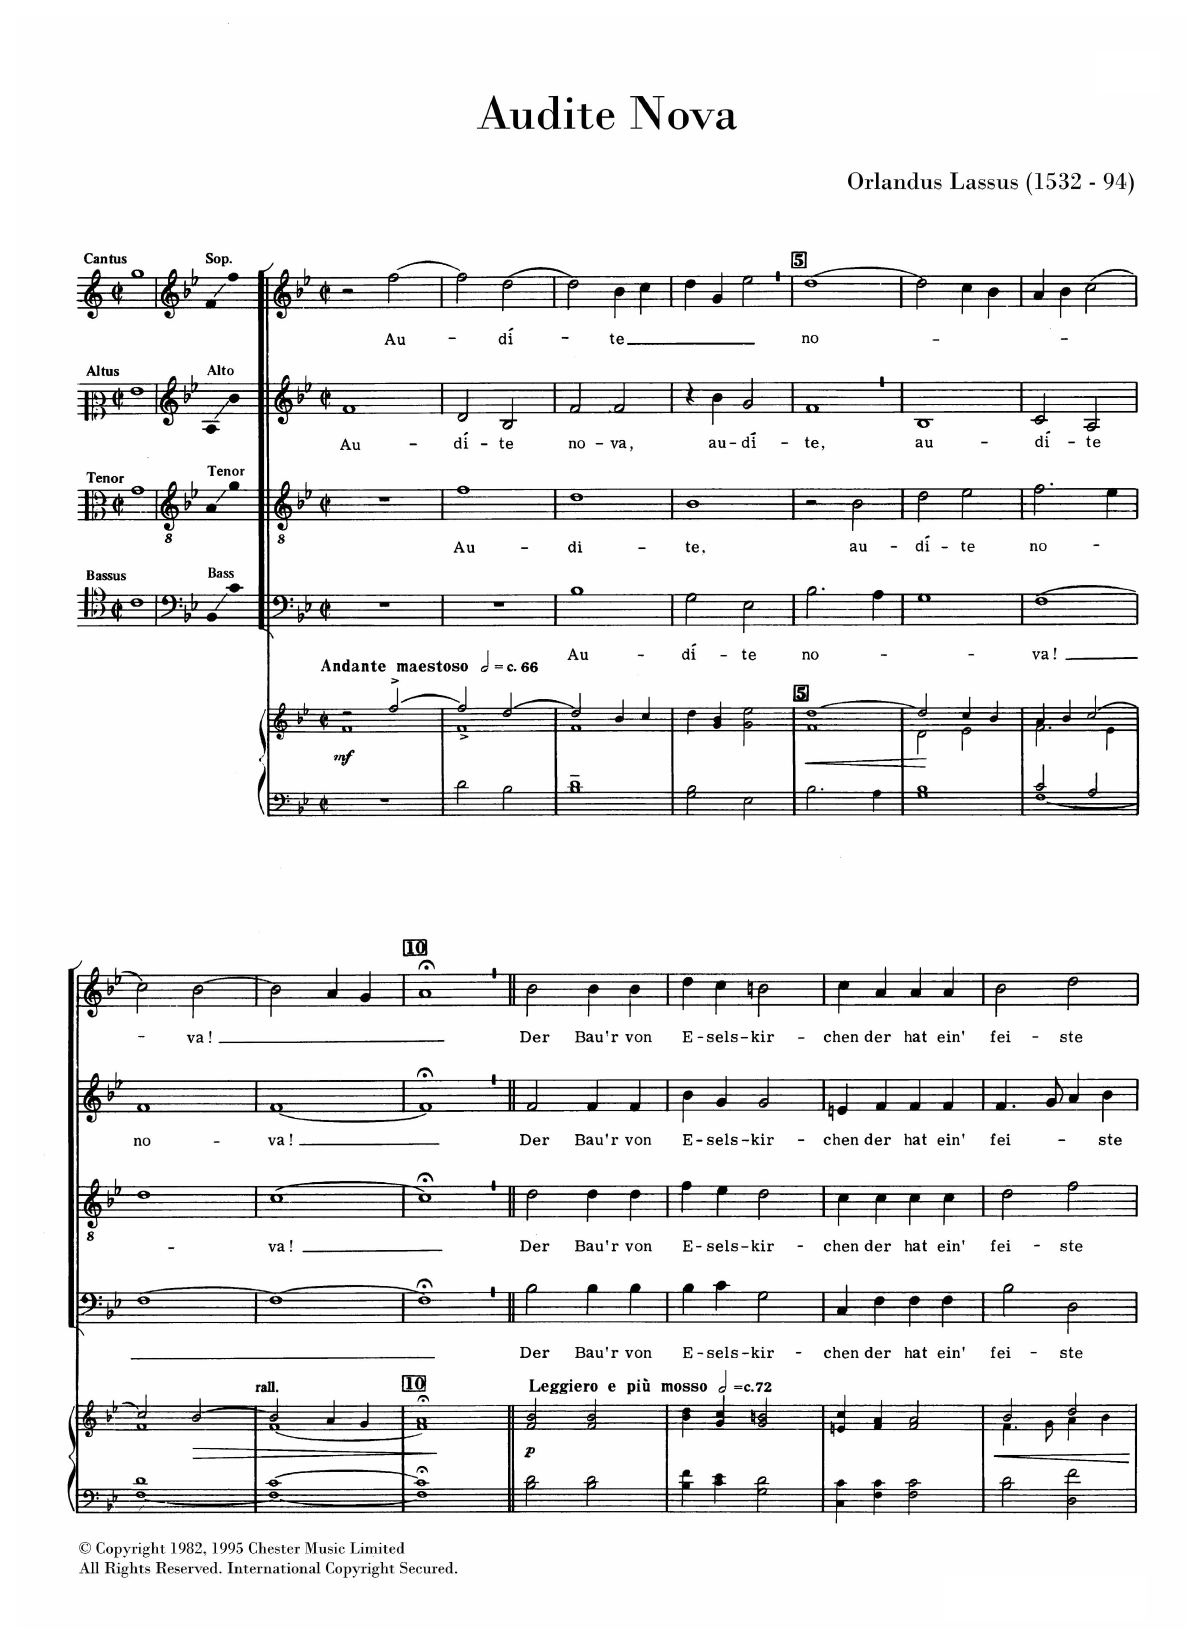 Orlandus Lassus Audite Nova Sheet Music Notes & Chords for SATB Choir - Download or Print PDF